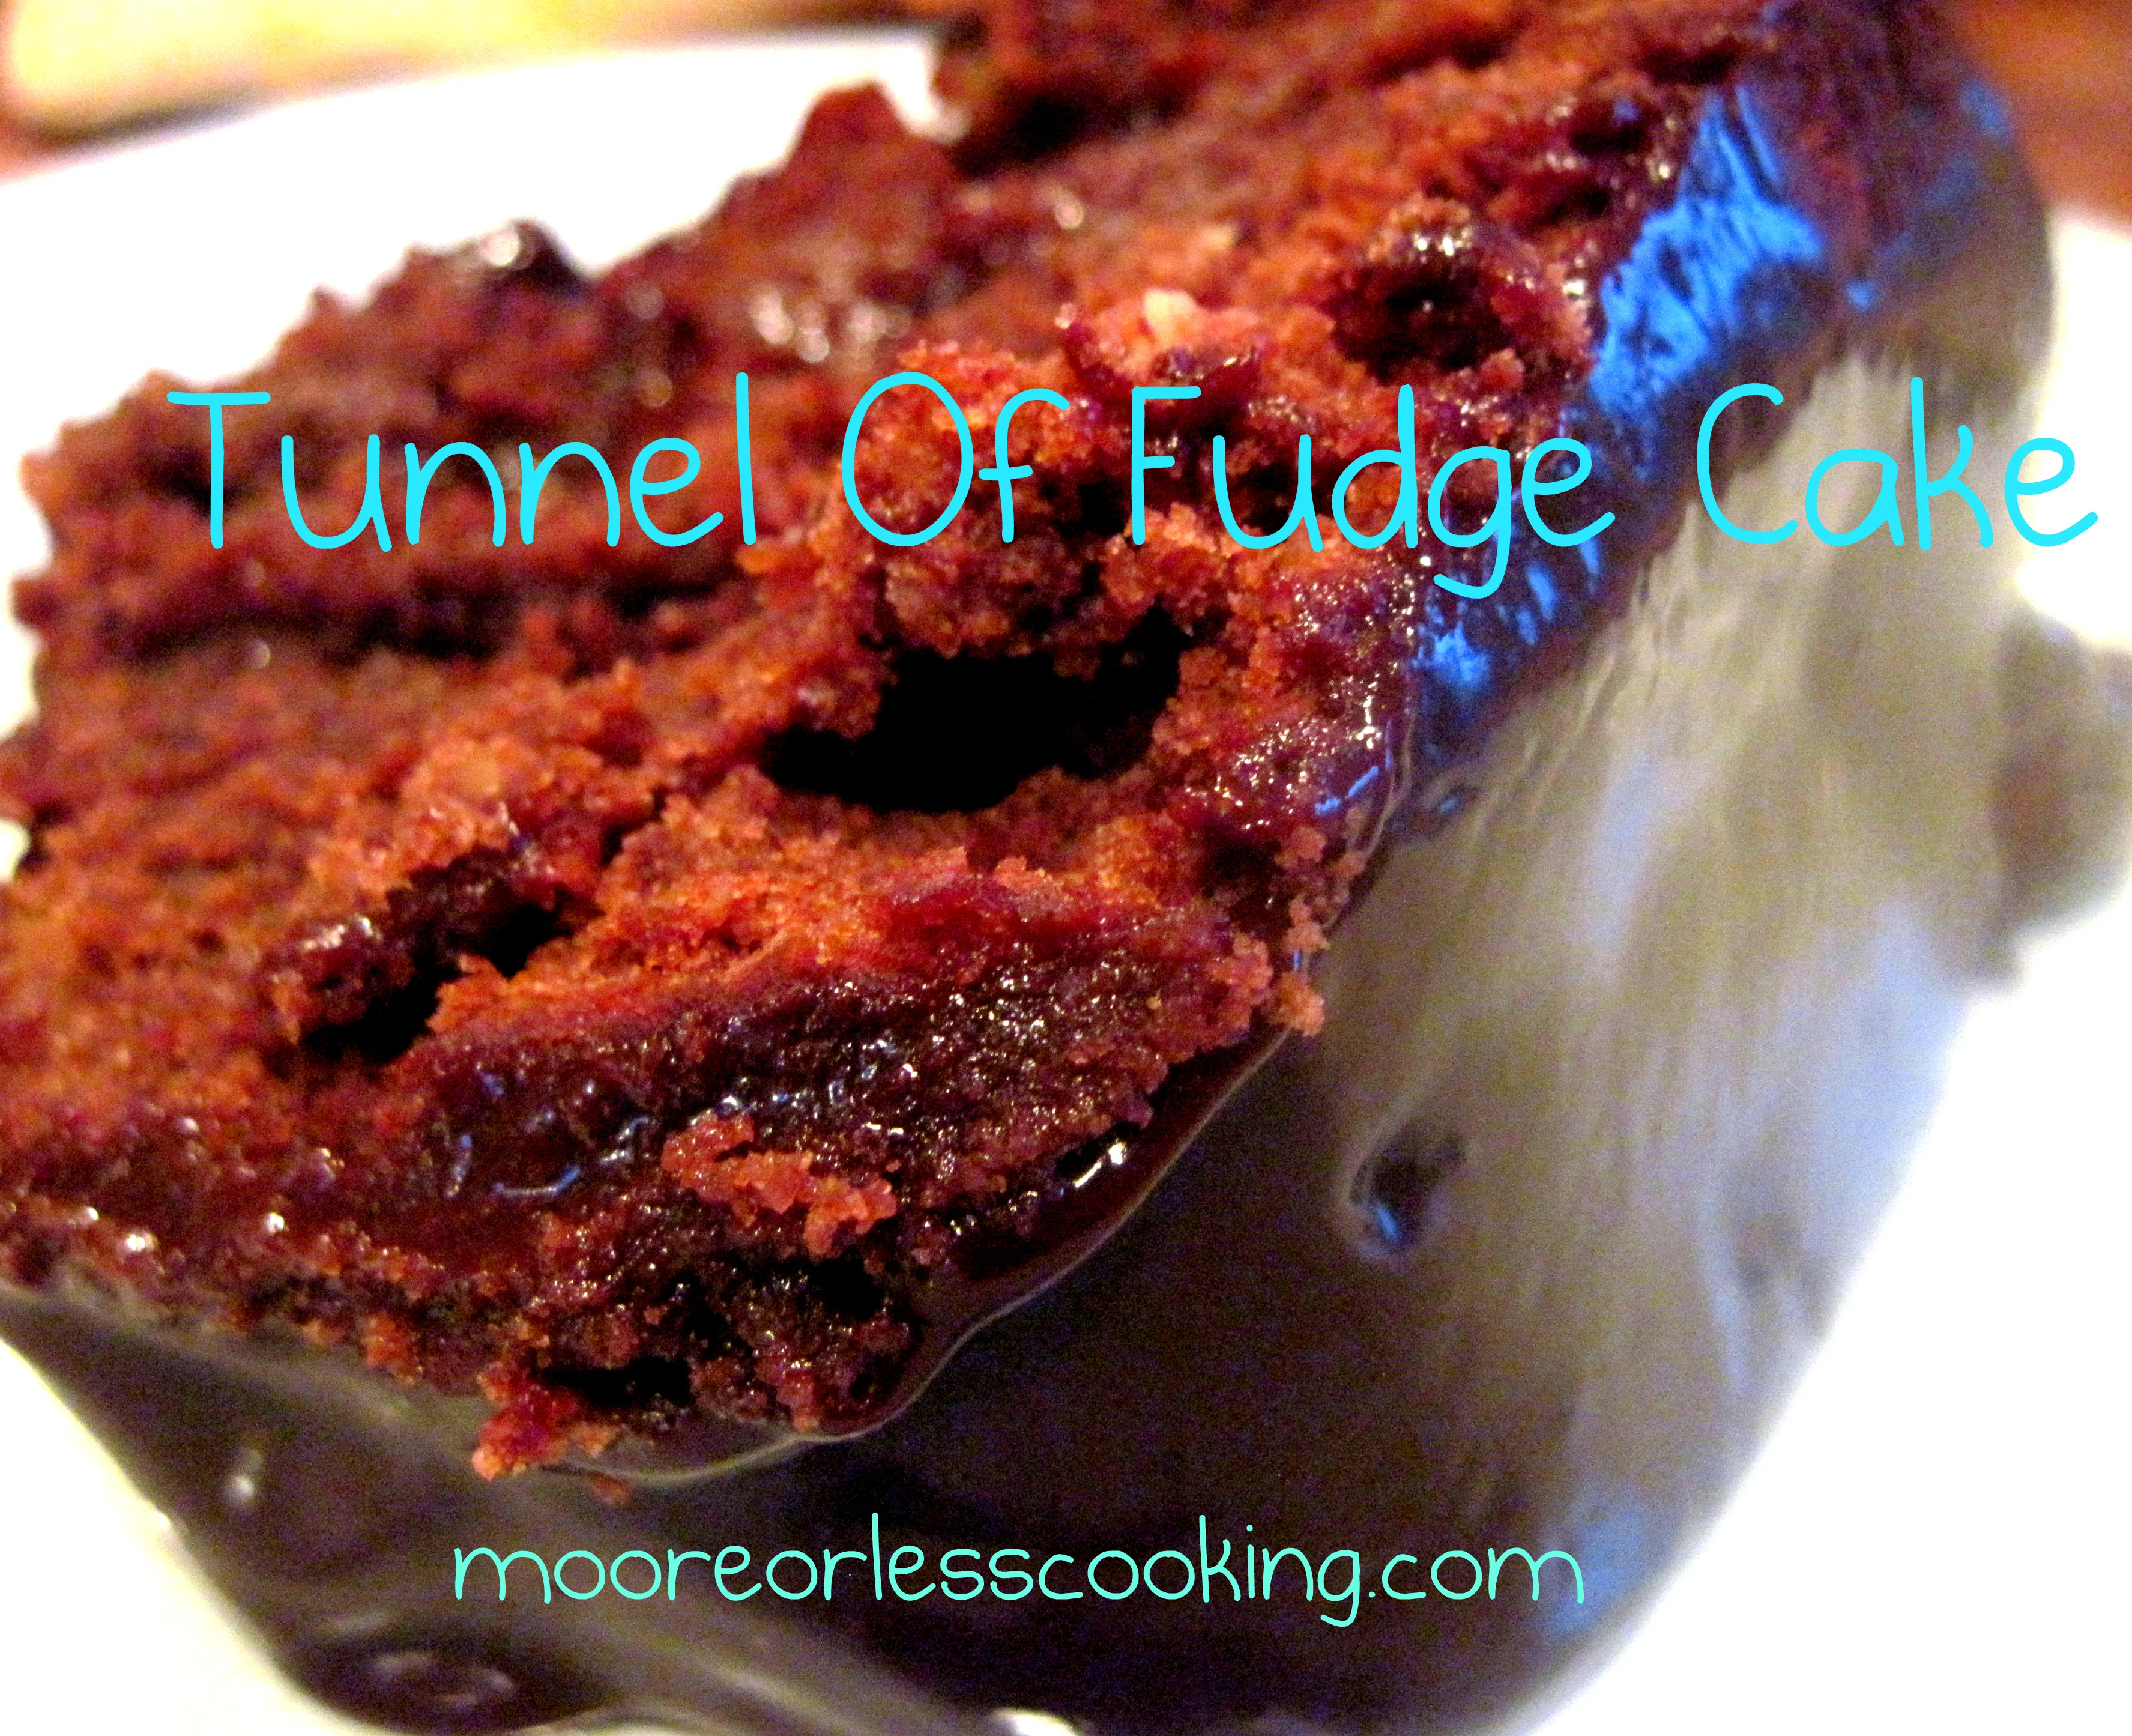 Tunnel Of Fudge Cake